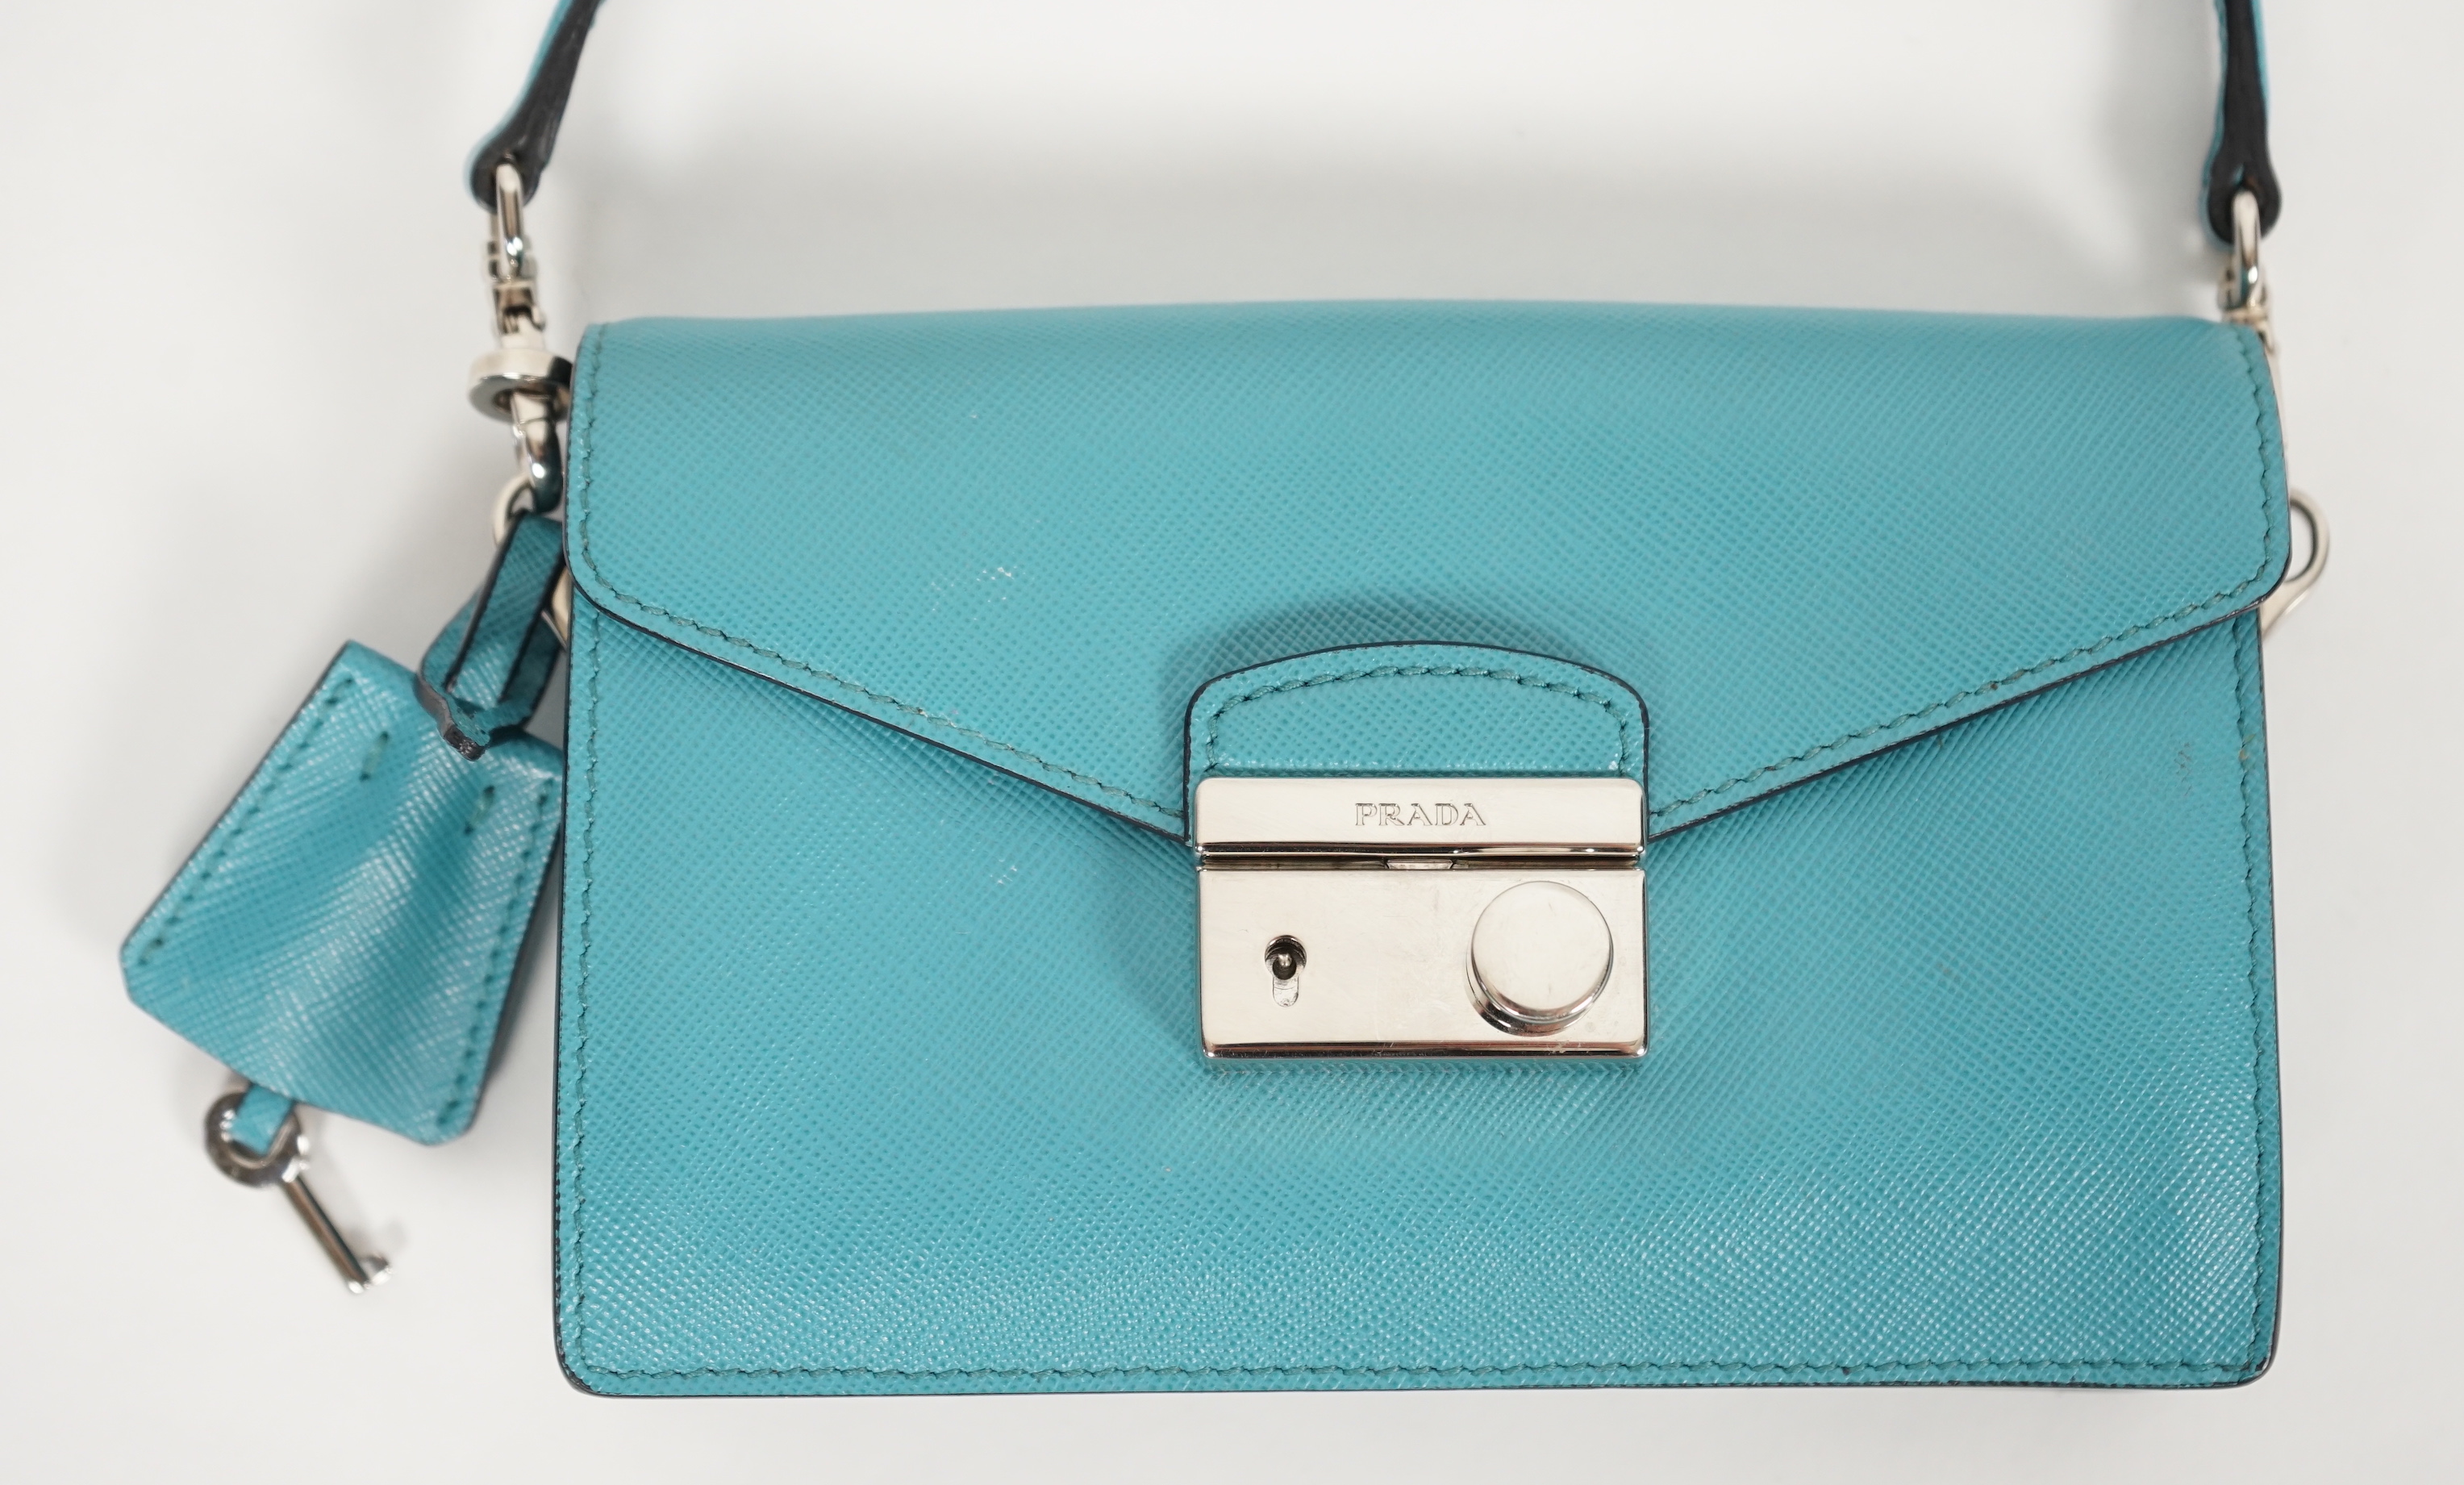 A Prada Saffiano Lux Mini Sound bag in Turchese, silver-tone hardware, with bag, box and - Image 3 of 8